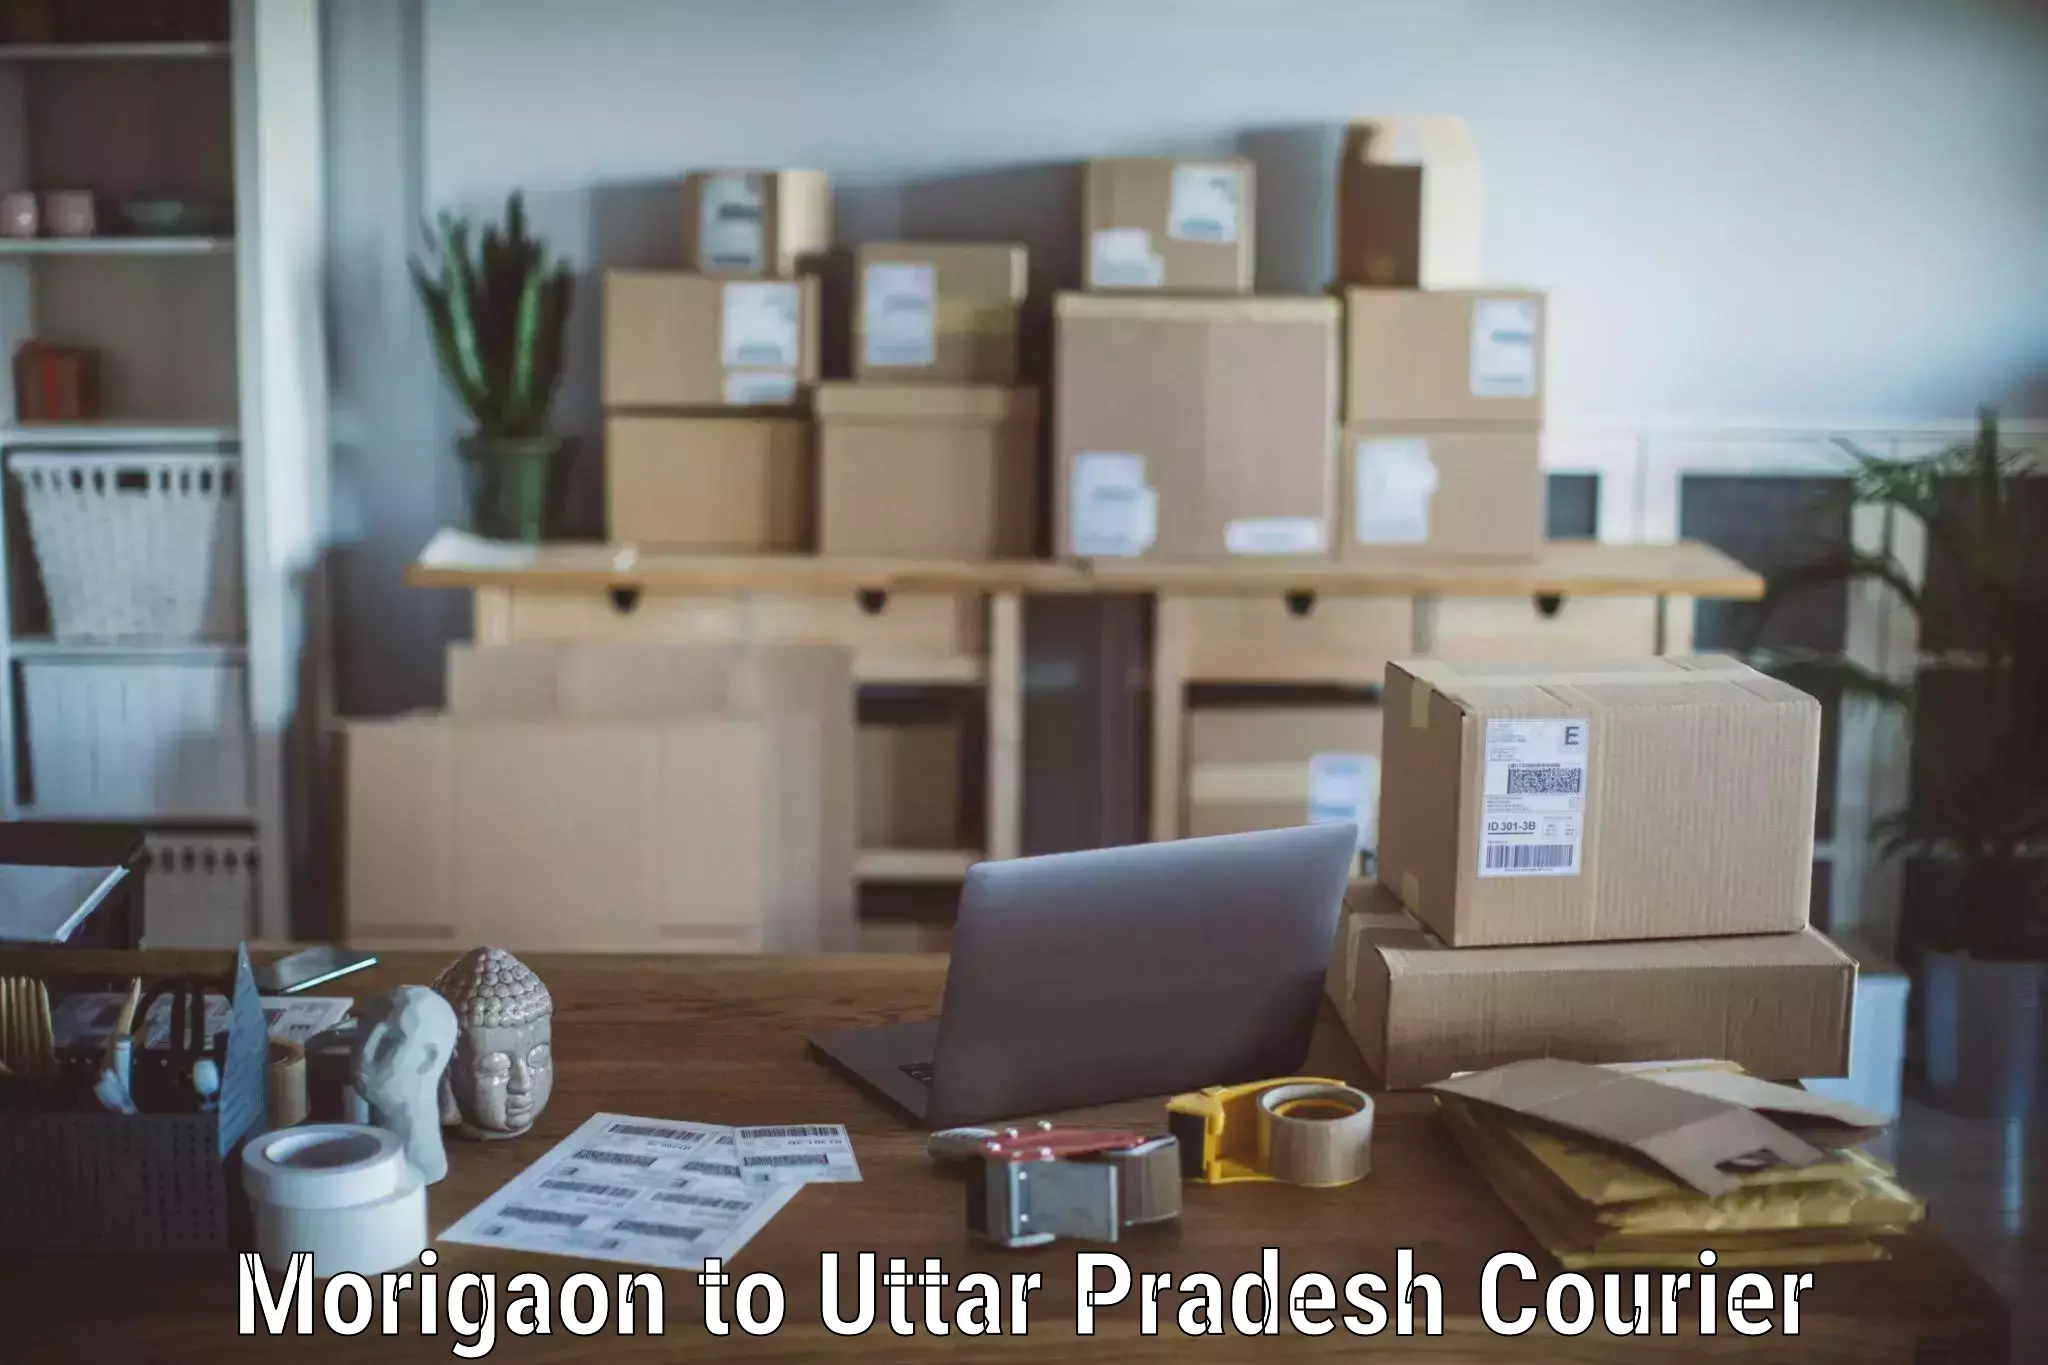 Professional movers and packers Morigaon to Uttar Pradesh